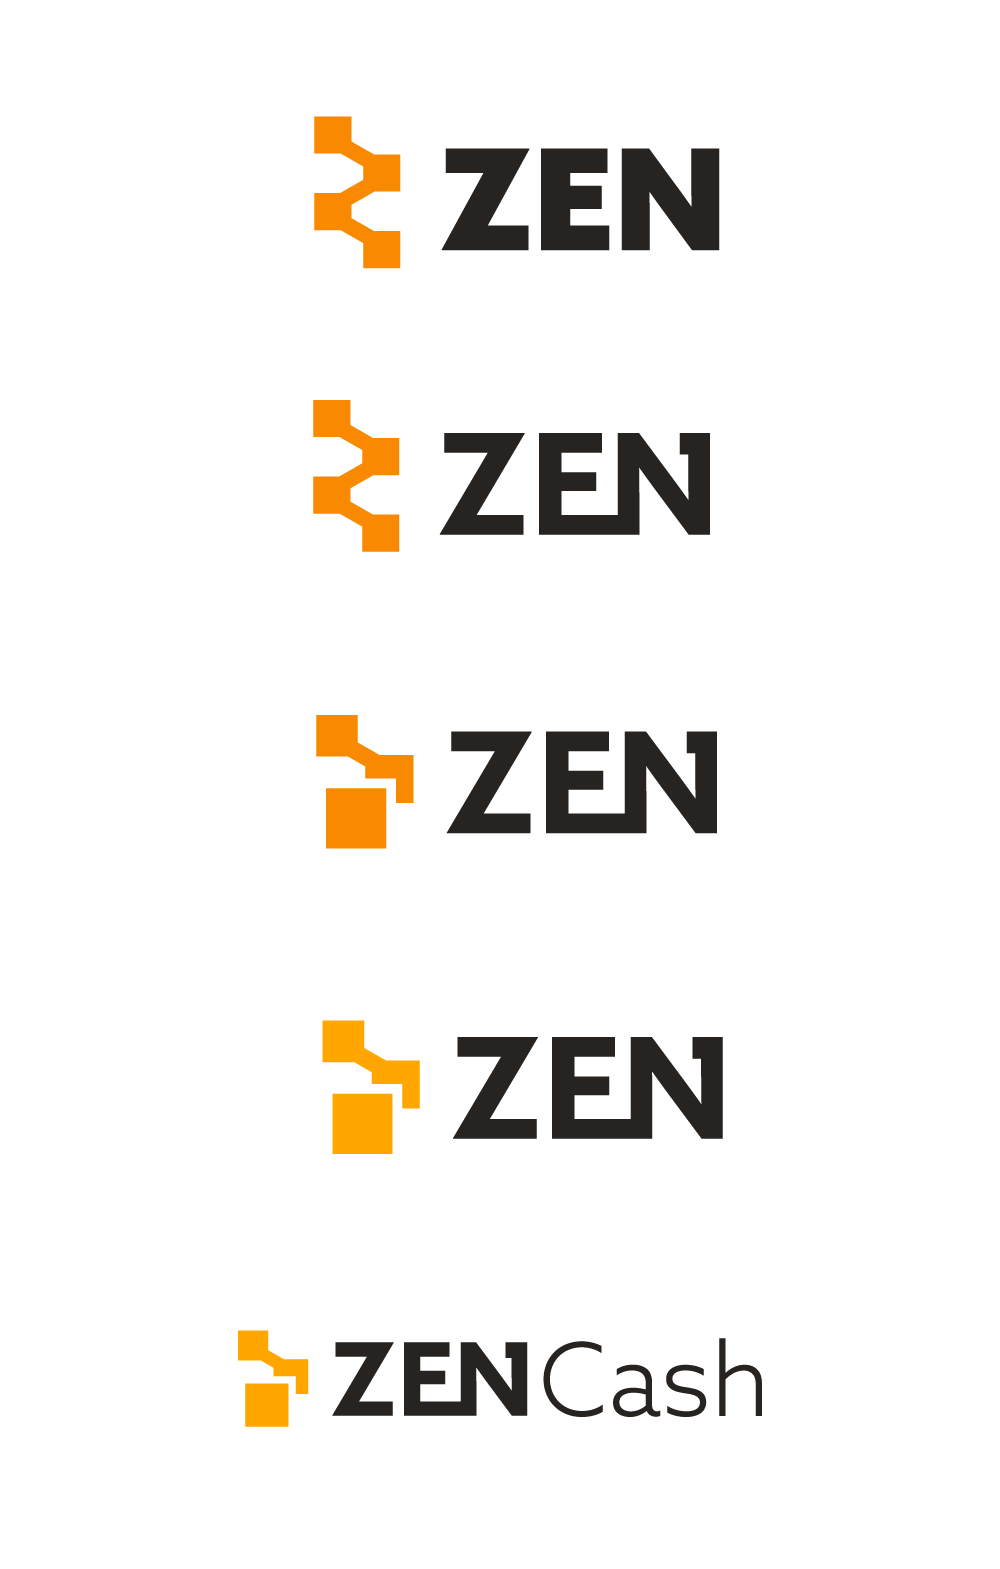 Zen cash logo-02.png